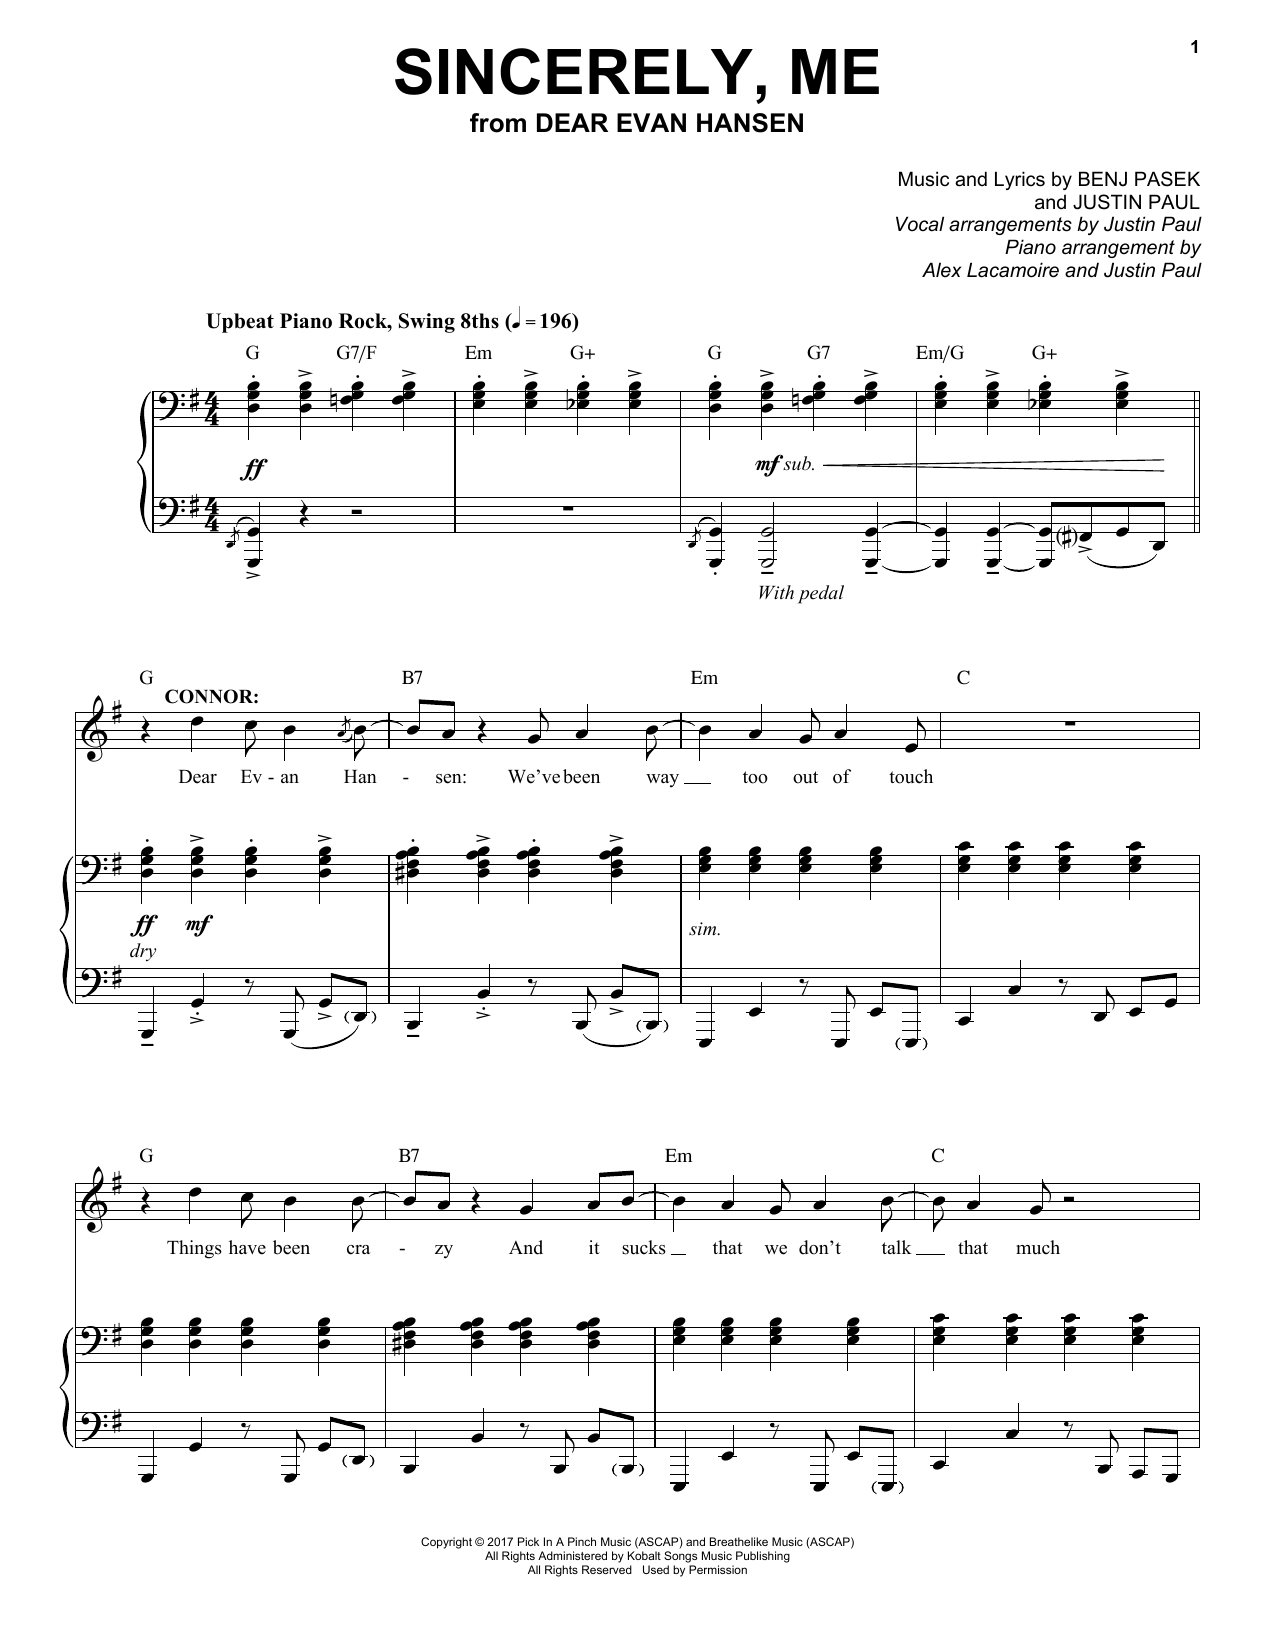 Pasek & Paul Sincerely, Me (from Dear Evan Hansen) Sheet Music Notes & Chords for Guitar Chords/Lyrics - Download or Print PDF